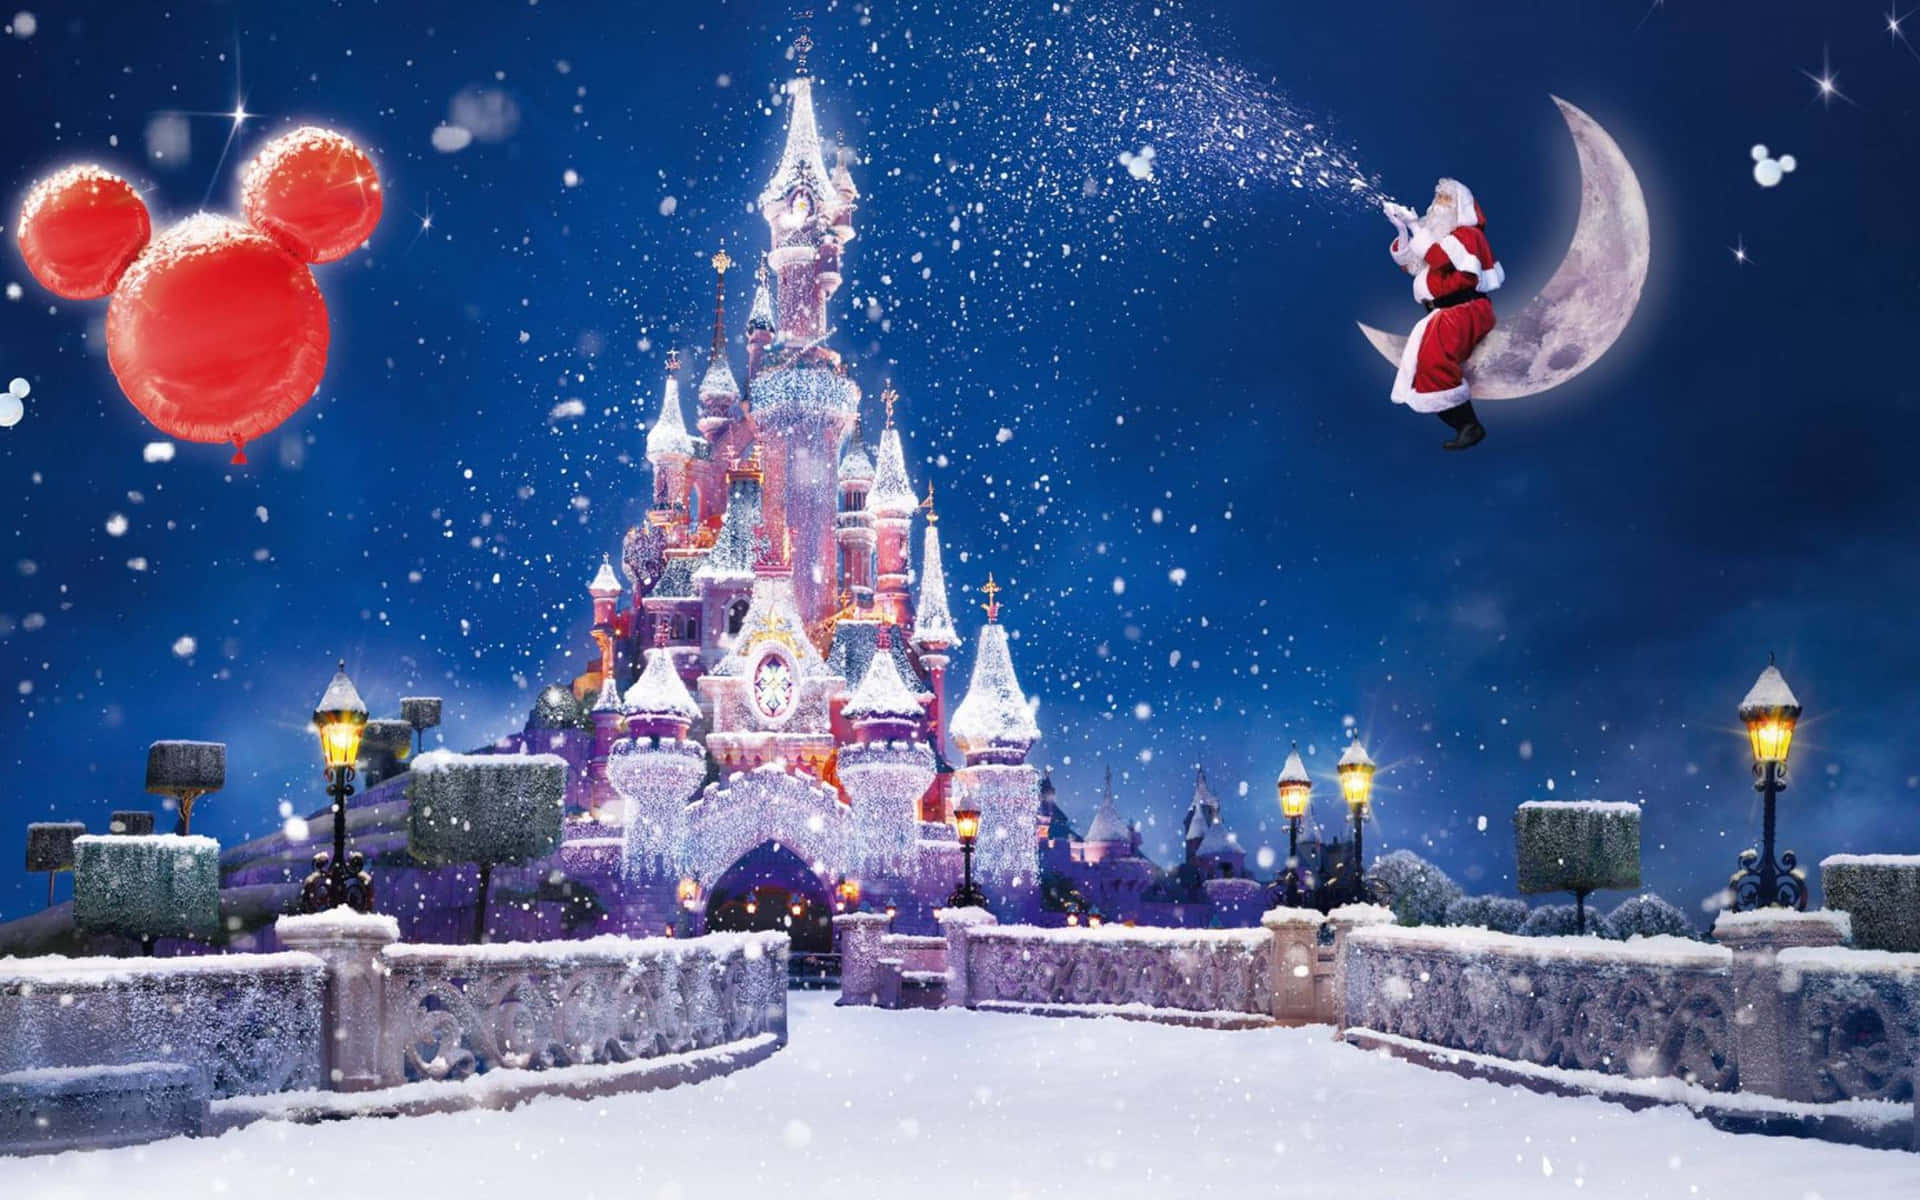 "Celebrate the Holidays with the Wonderful World of Disney"